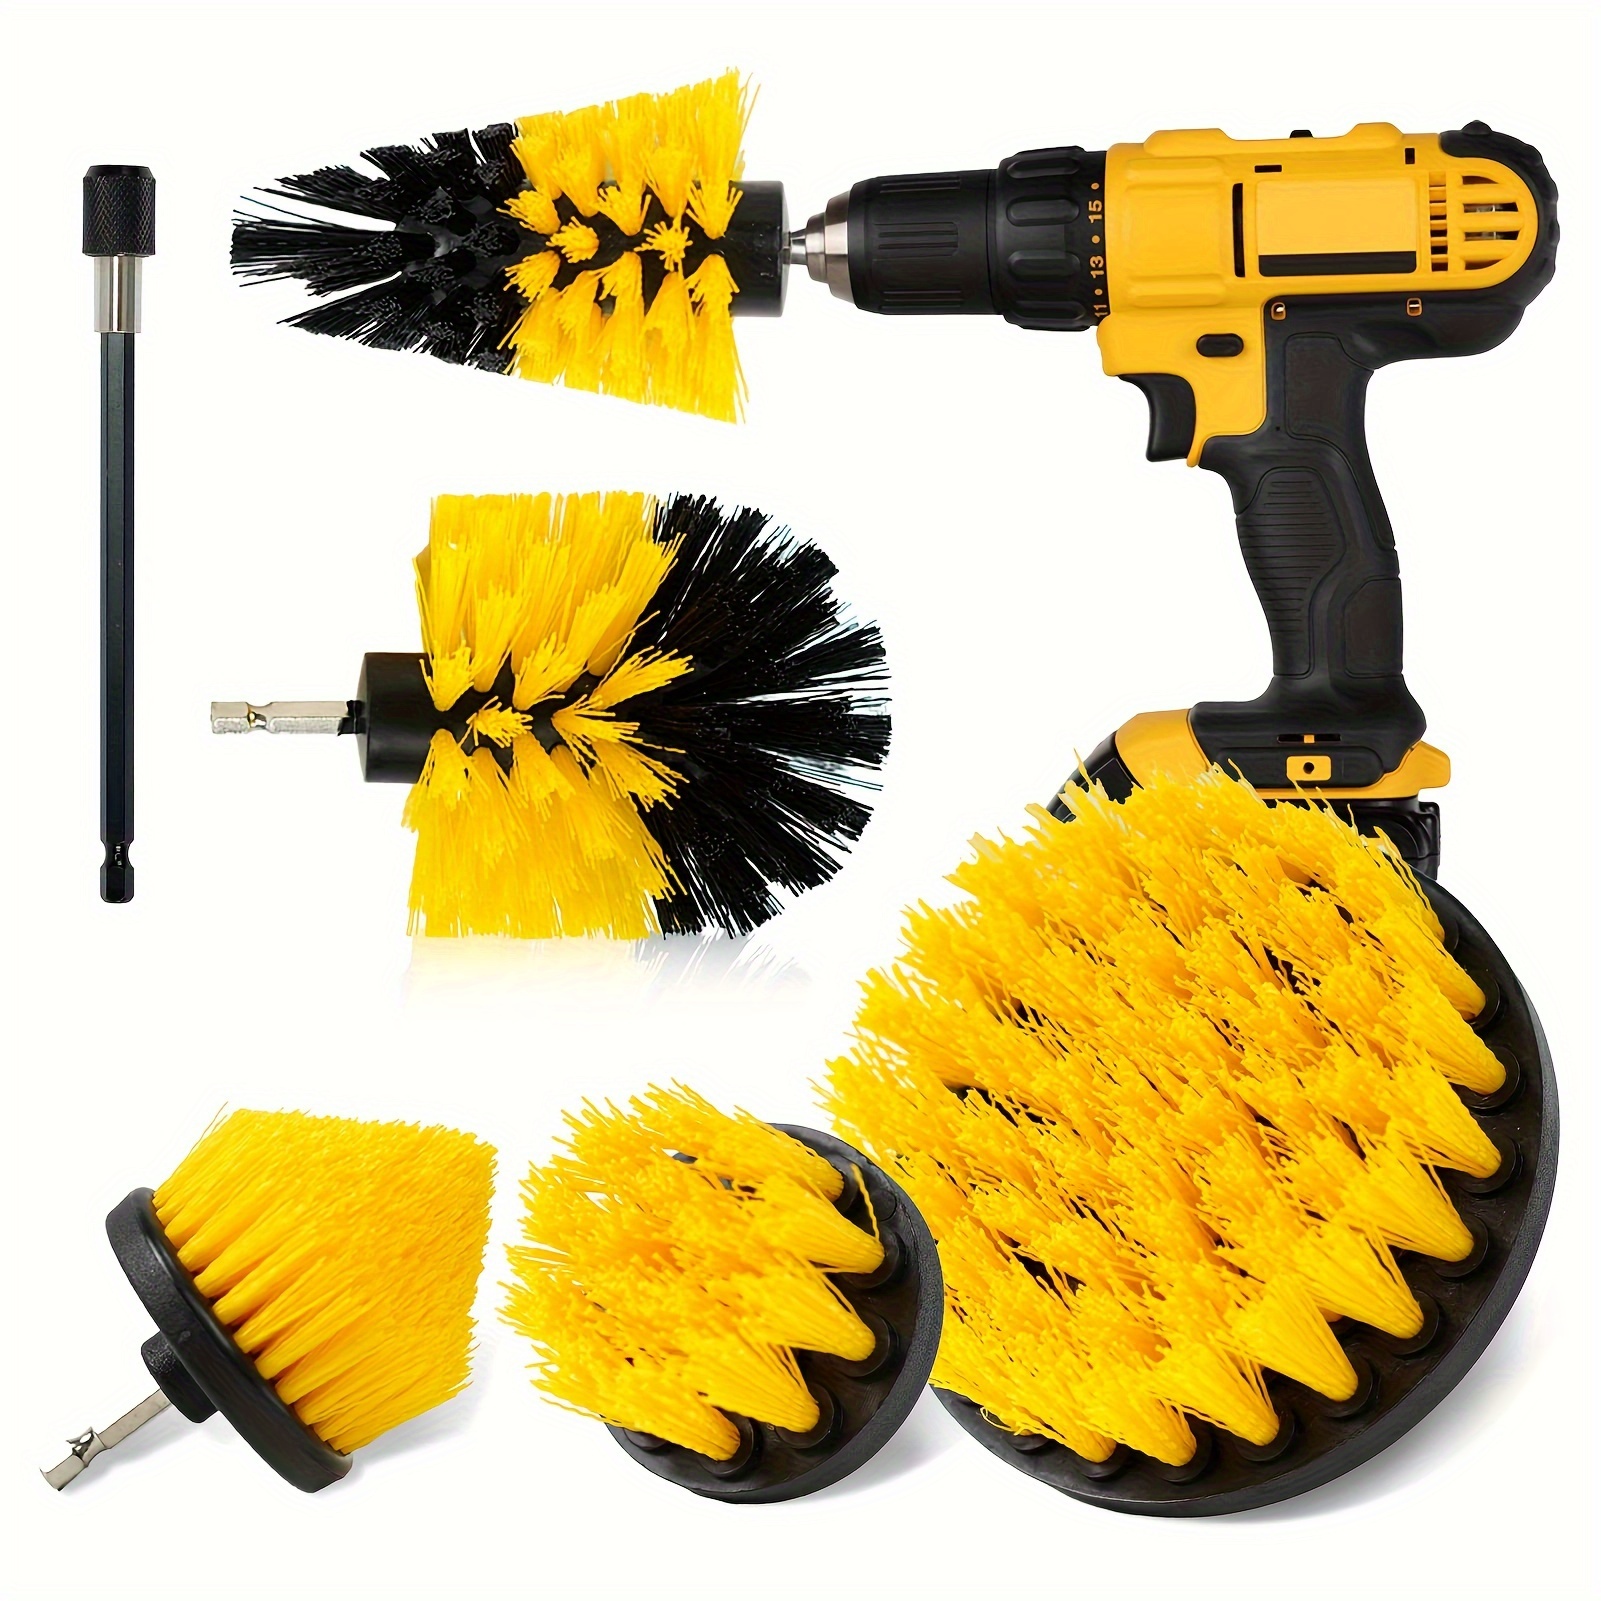 Drill Brush Set Power Scrubber Wash Cleaning Brushes - Temu